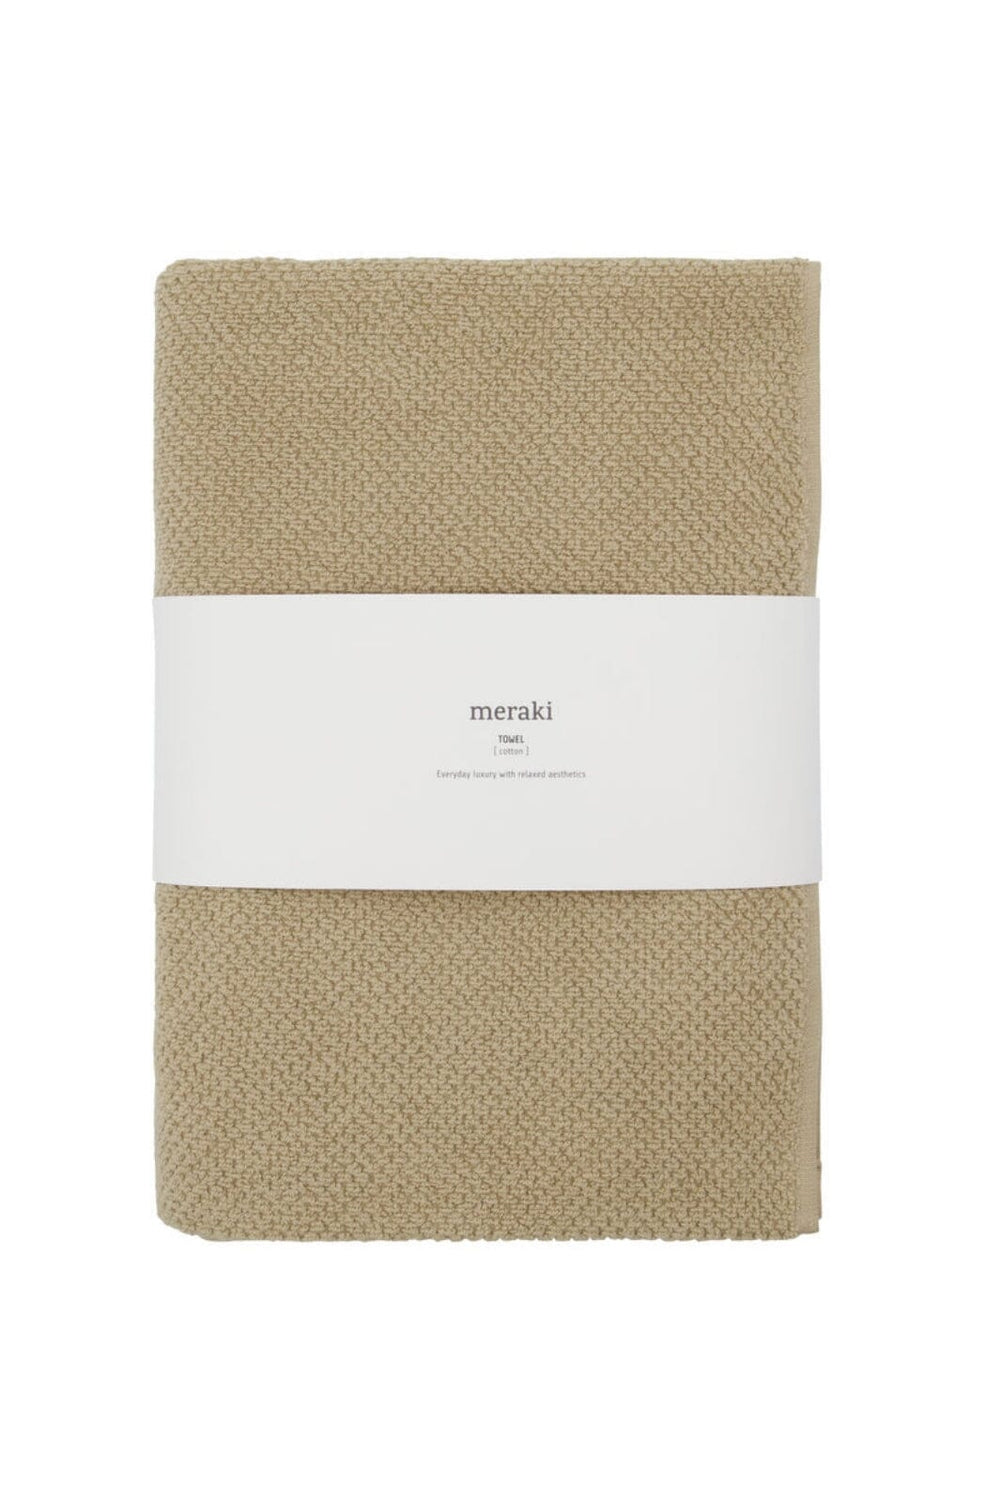 Meraki - Håndklæde, Solid, 70 x 140, Safari Håndklæder 